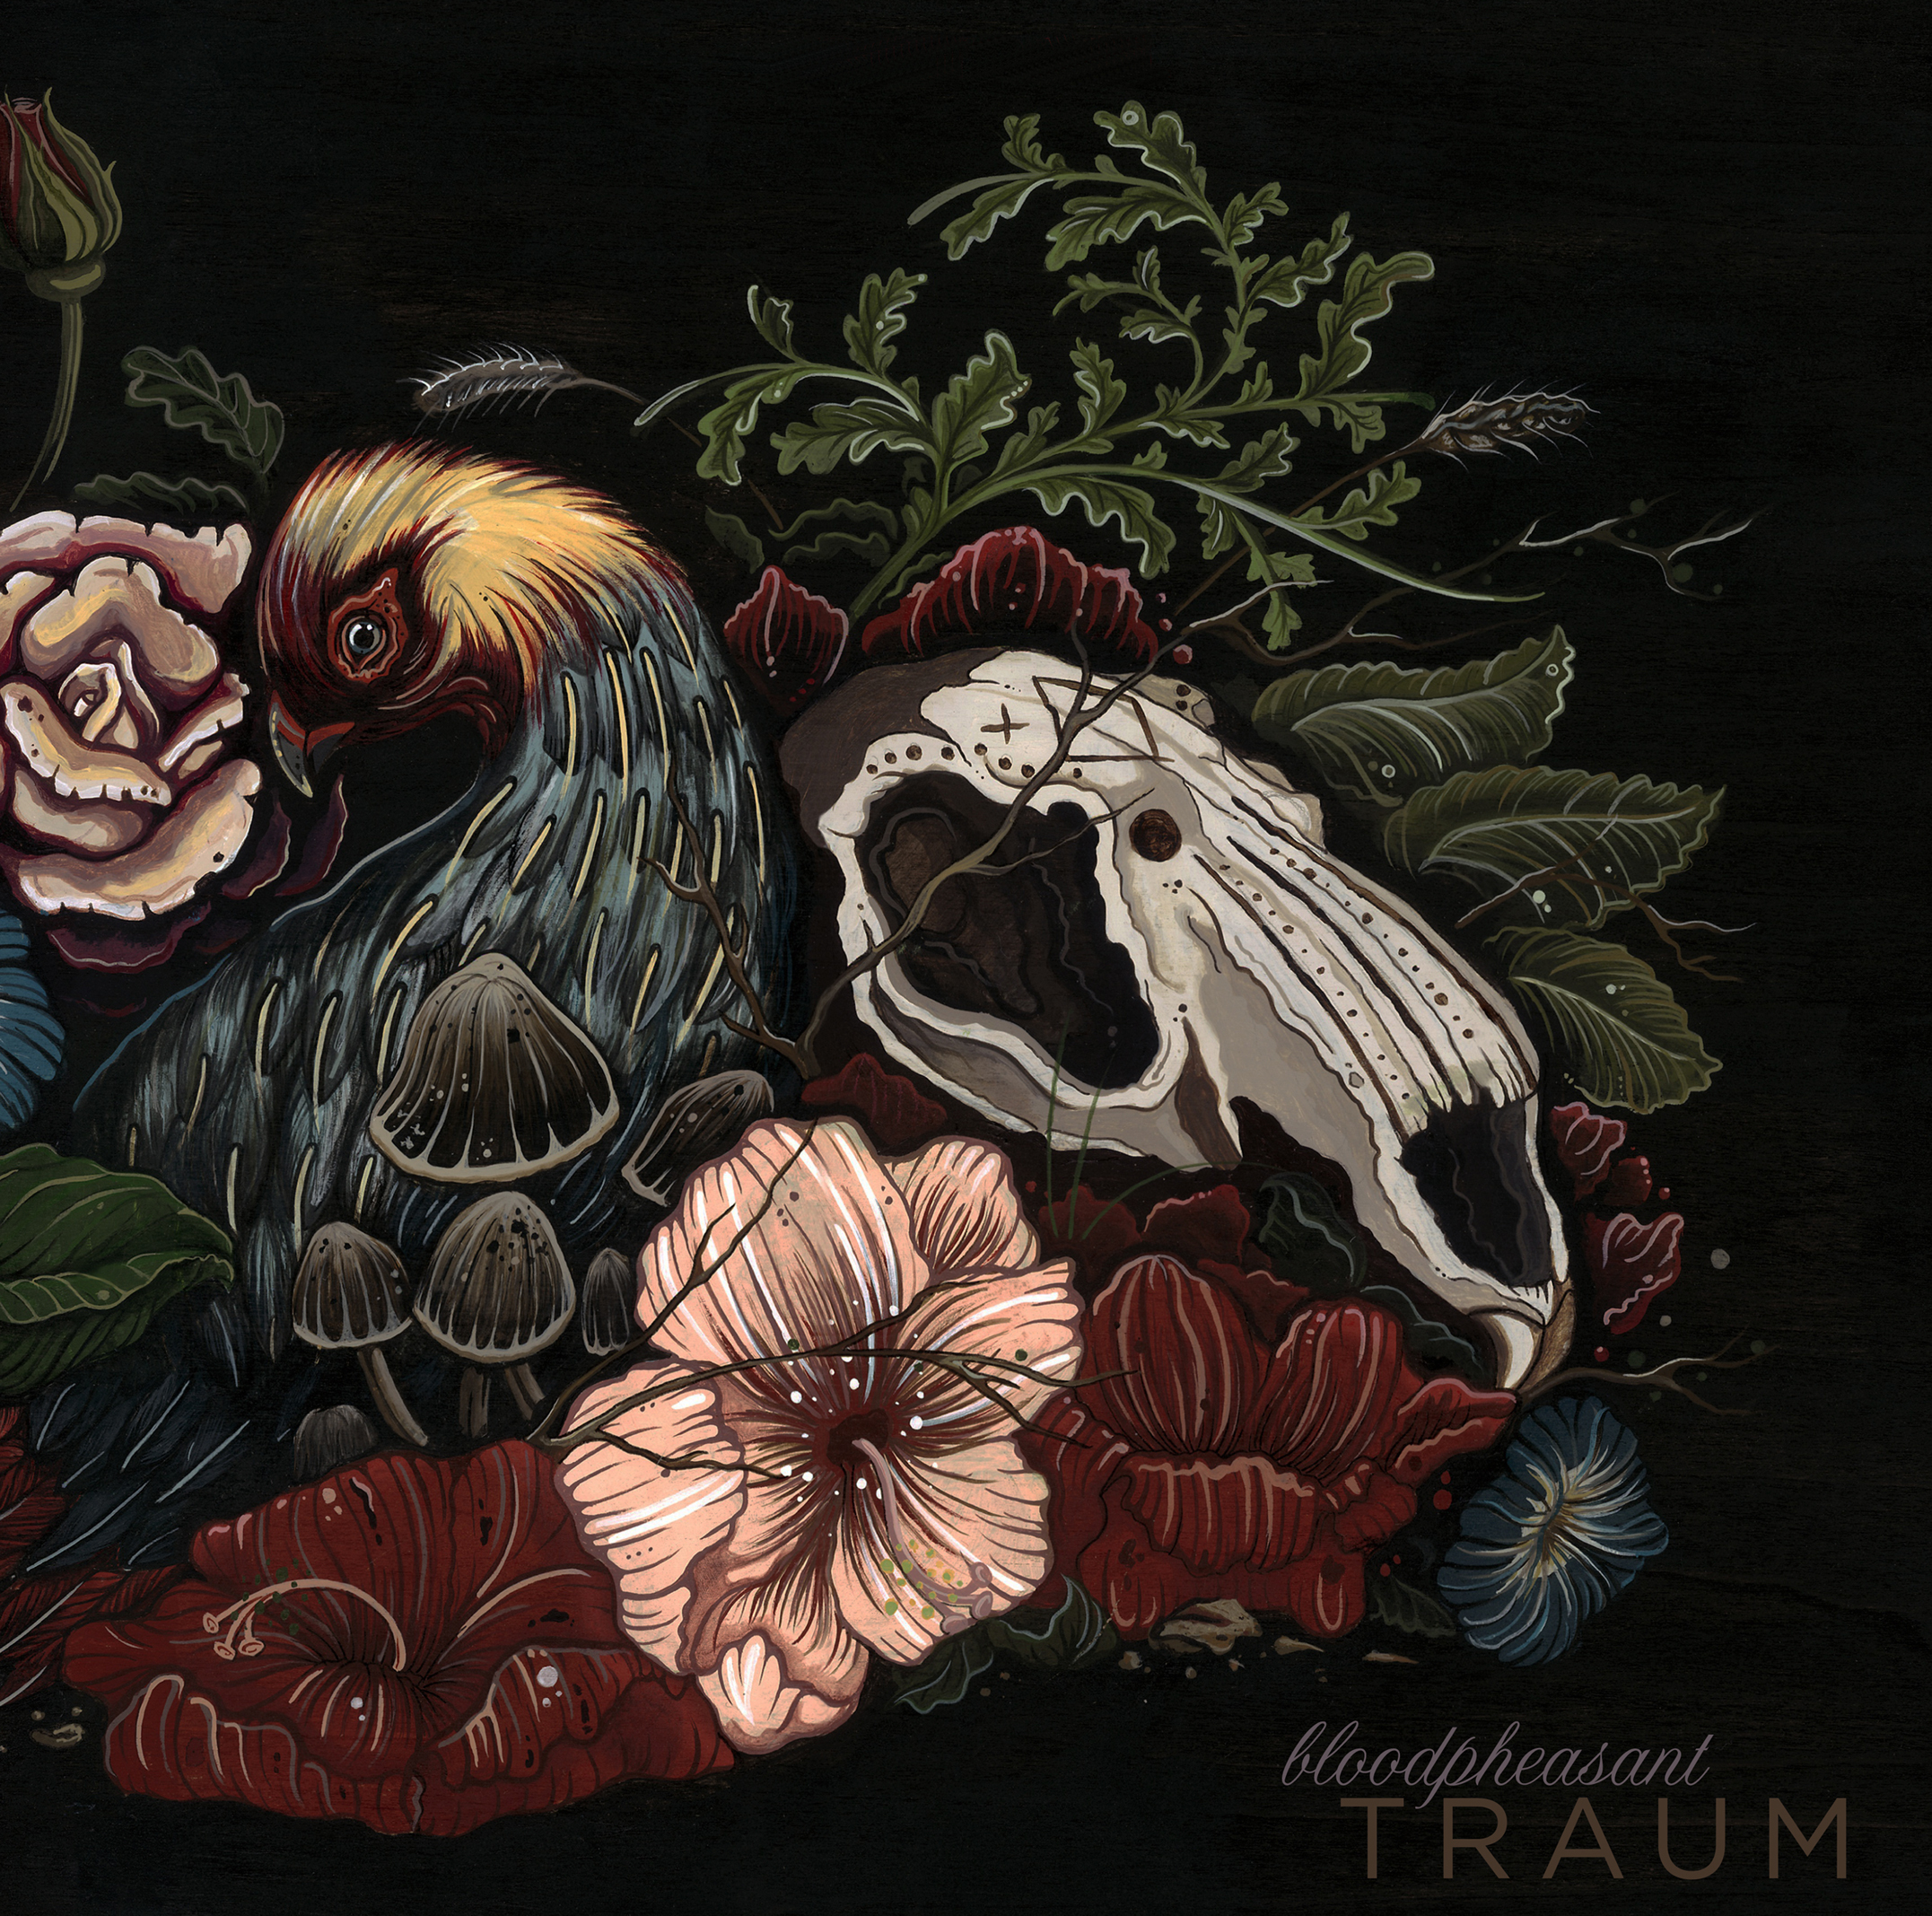 Bloodpheasant - Traum LP (random marble vinyl) - Click Image to Close